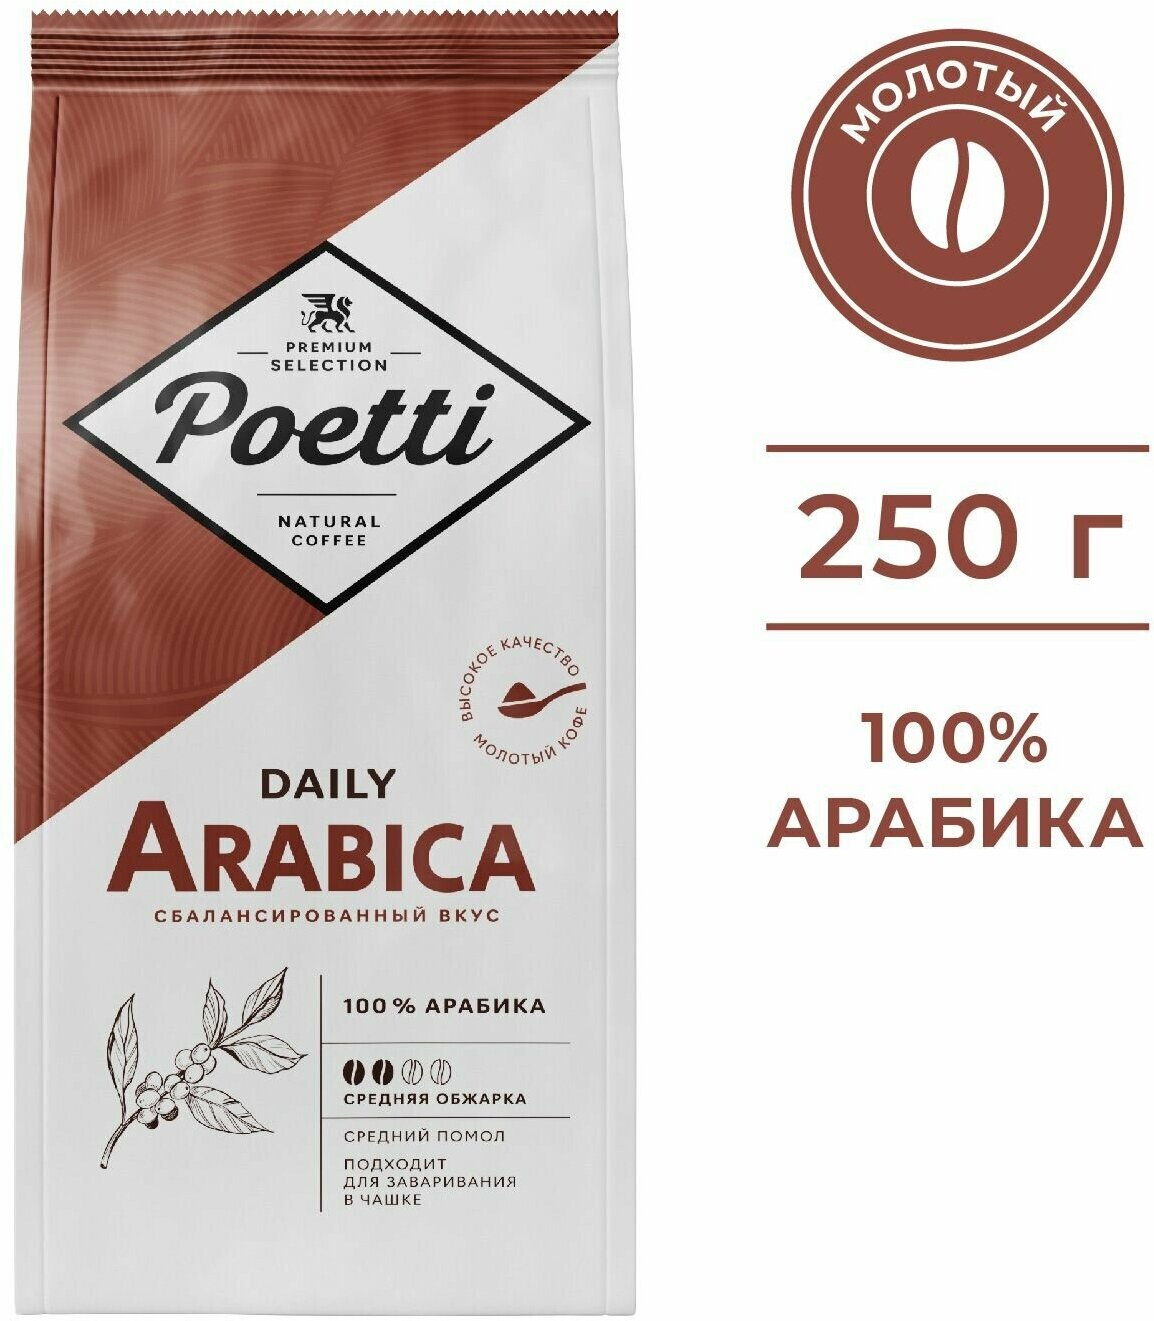 Кофе молотый Poetti Daily Arabica, для чашки, натуральный, жареный, 250 г - фотография № 3